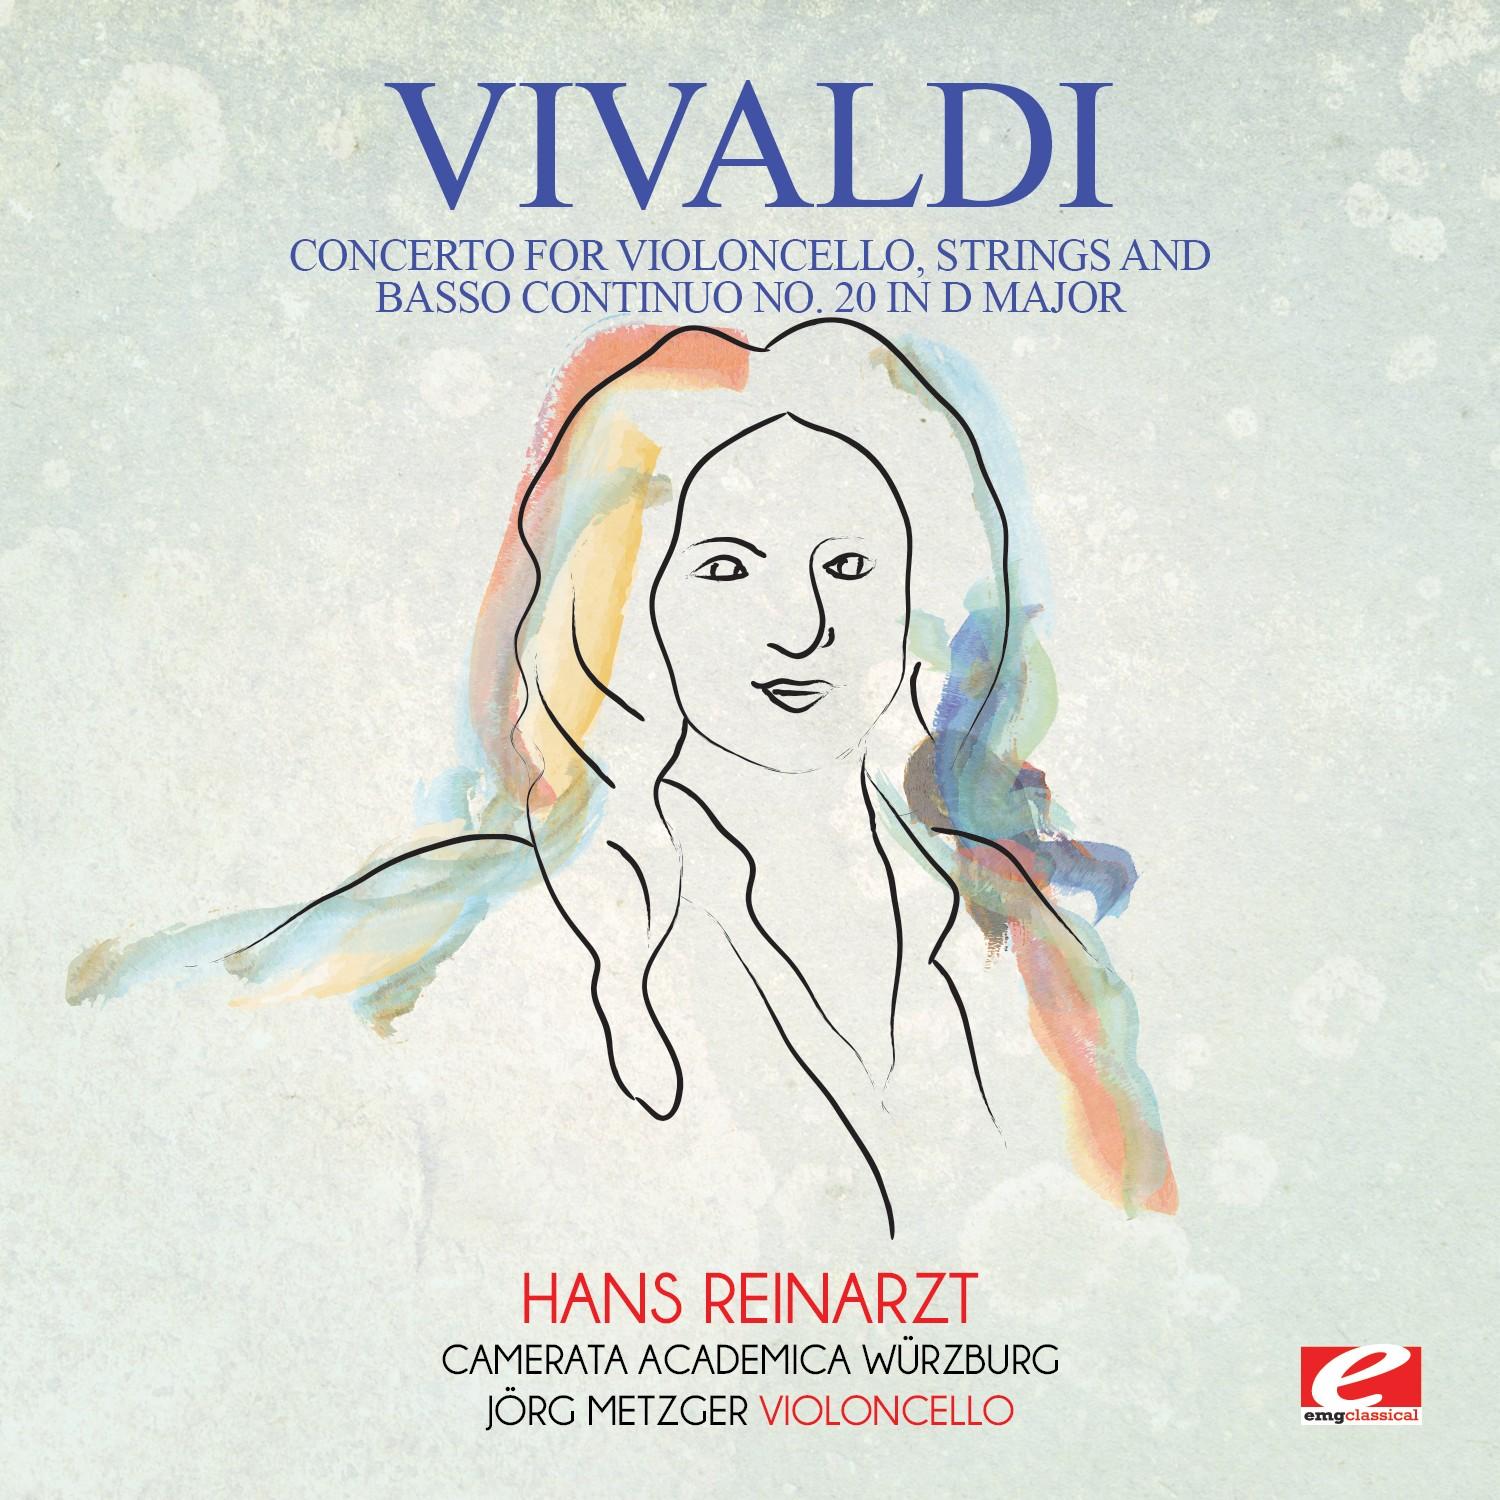 Concerto for Violoncello, Strings and Basso Continuo No. 20 in D Major: III. Allegro vivace